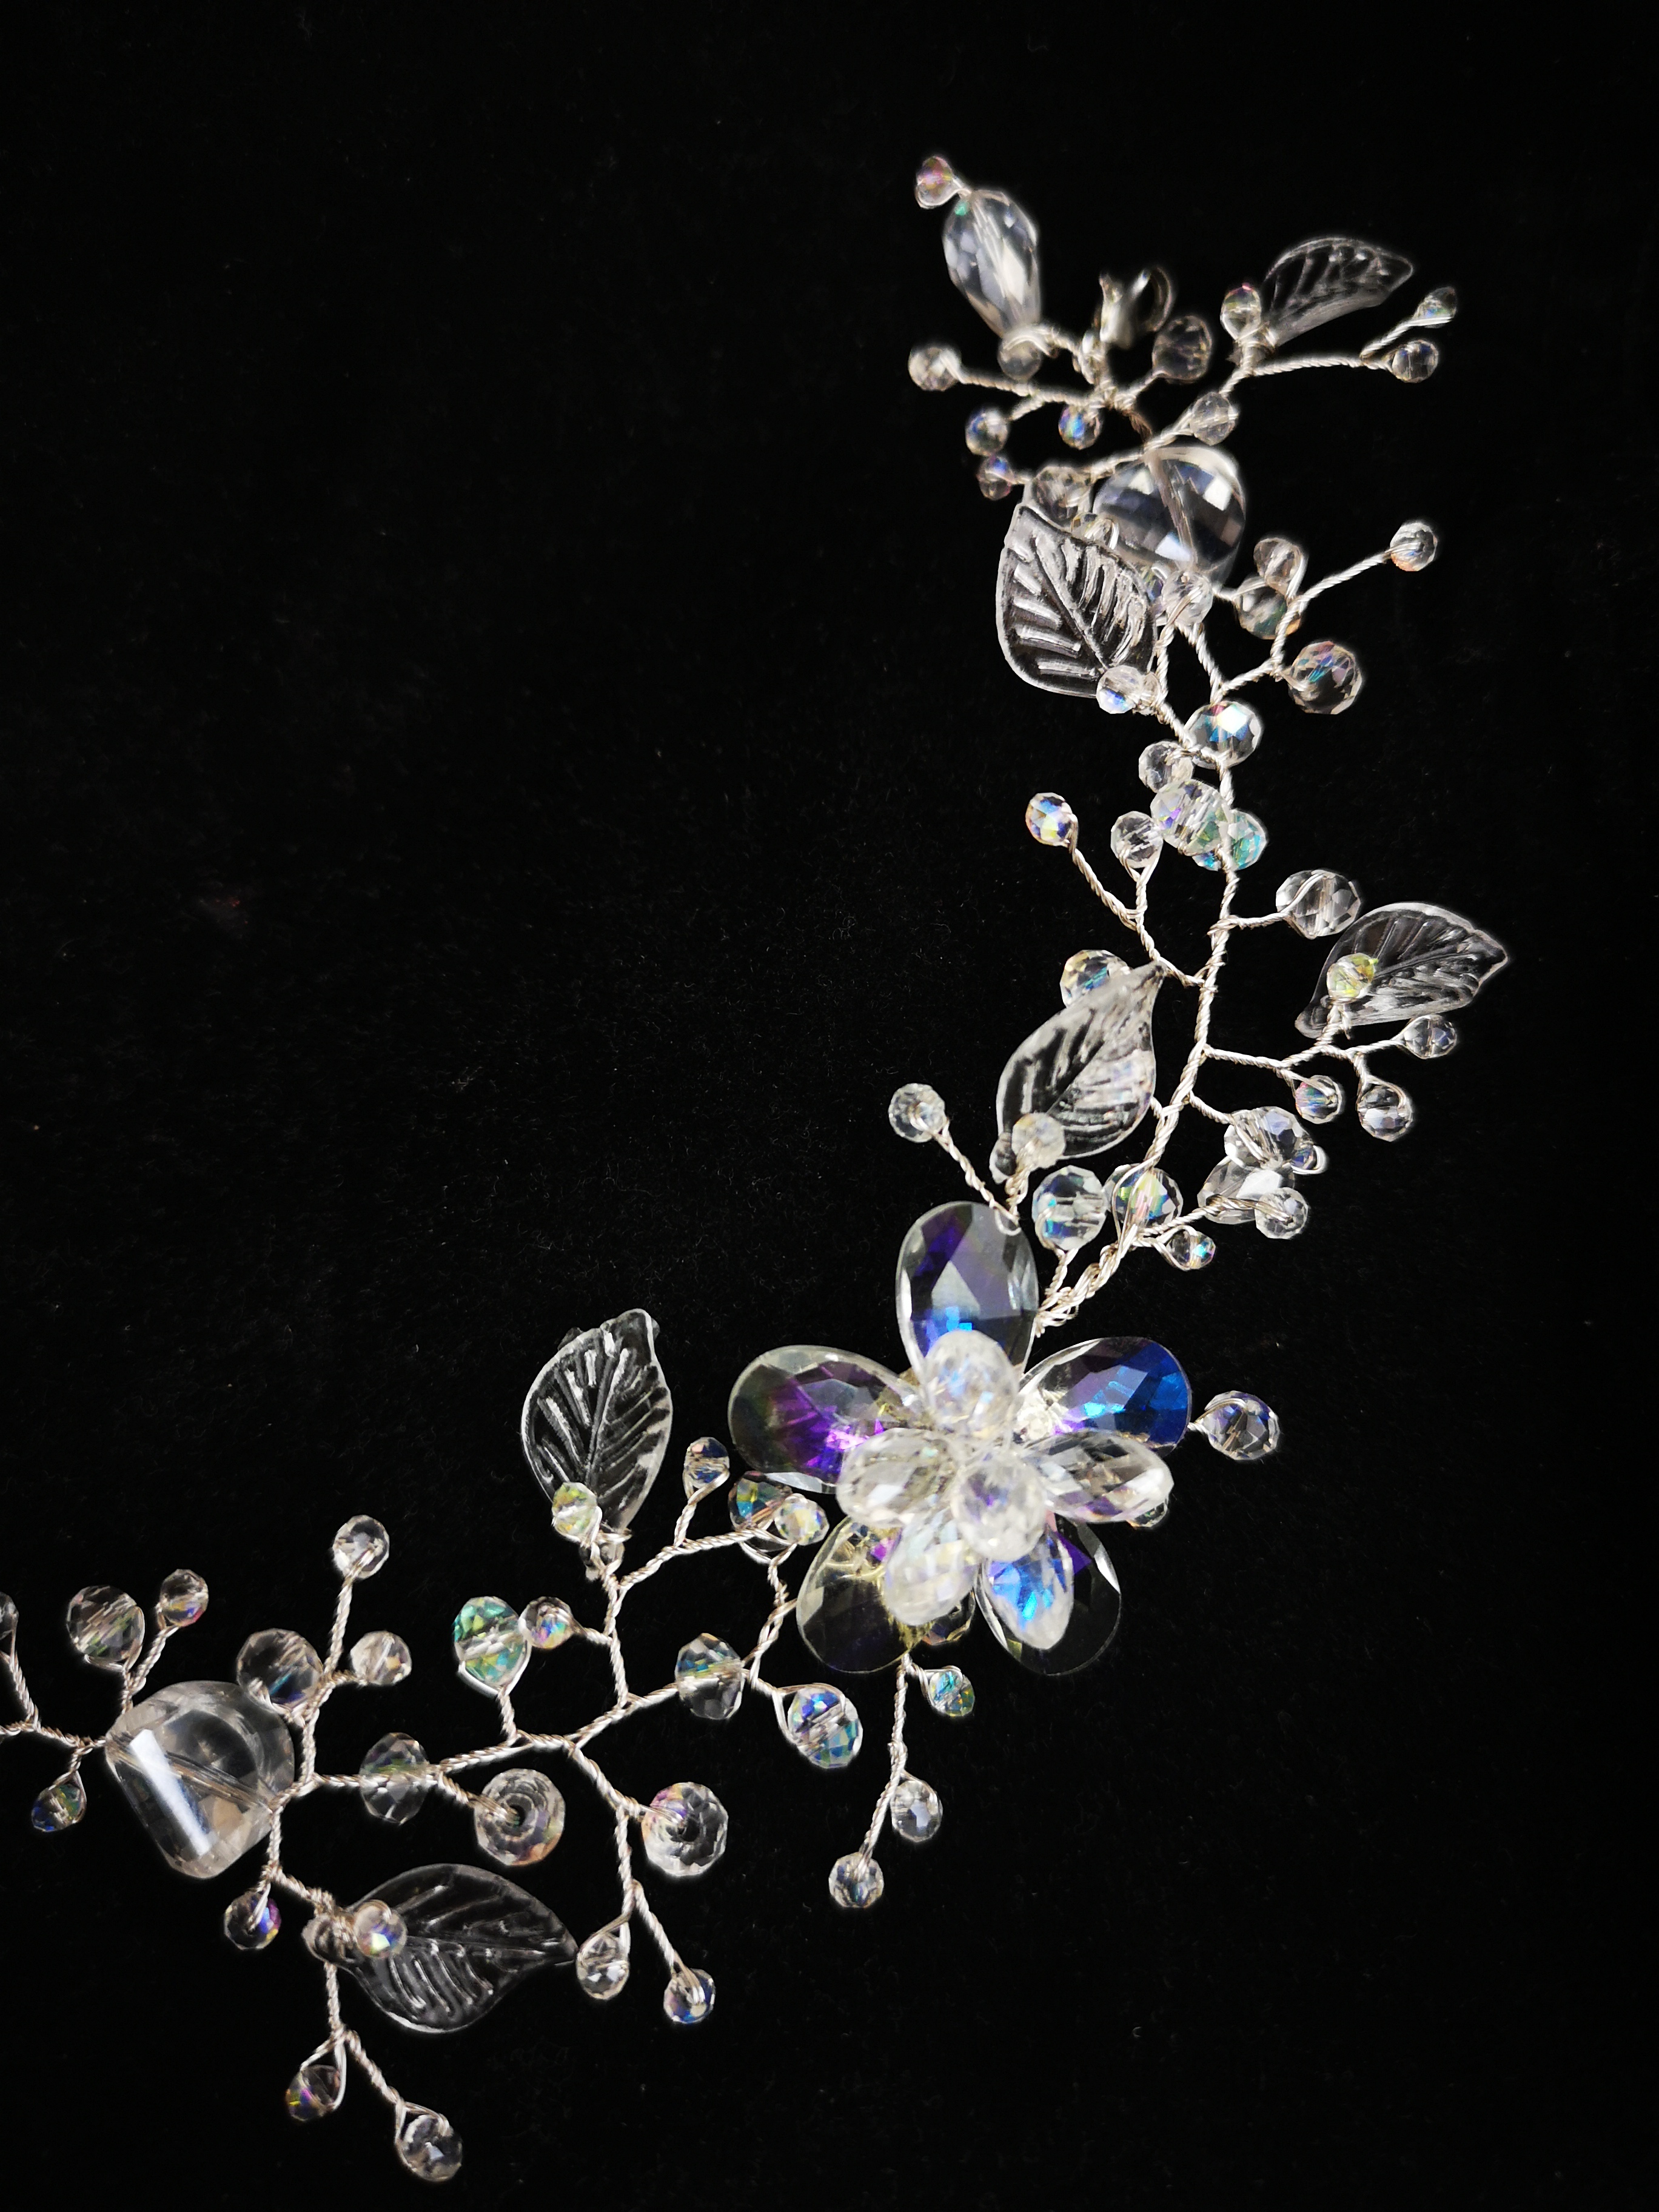 Designer Crystal Bracelet with flowers and leaves - Flowers of Mist